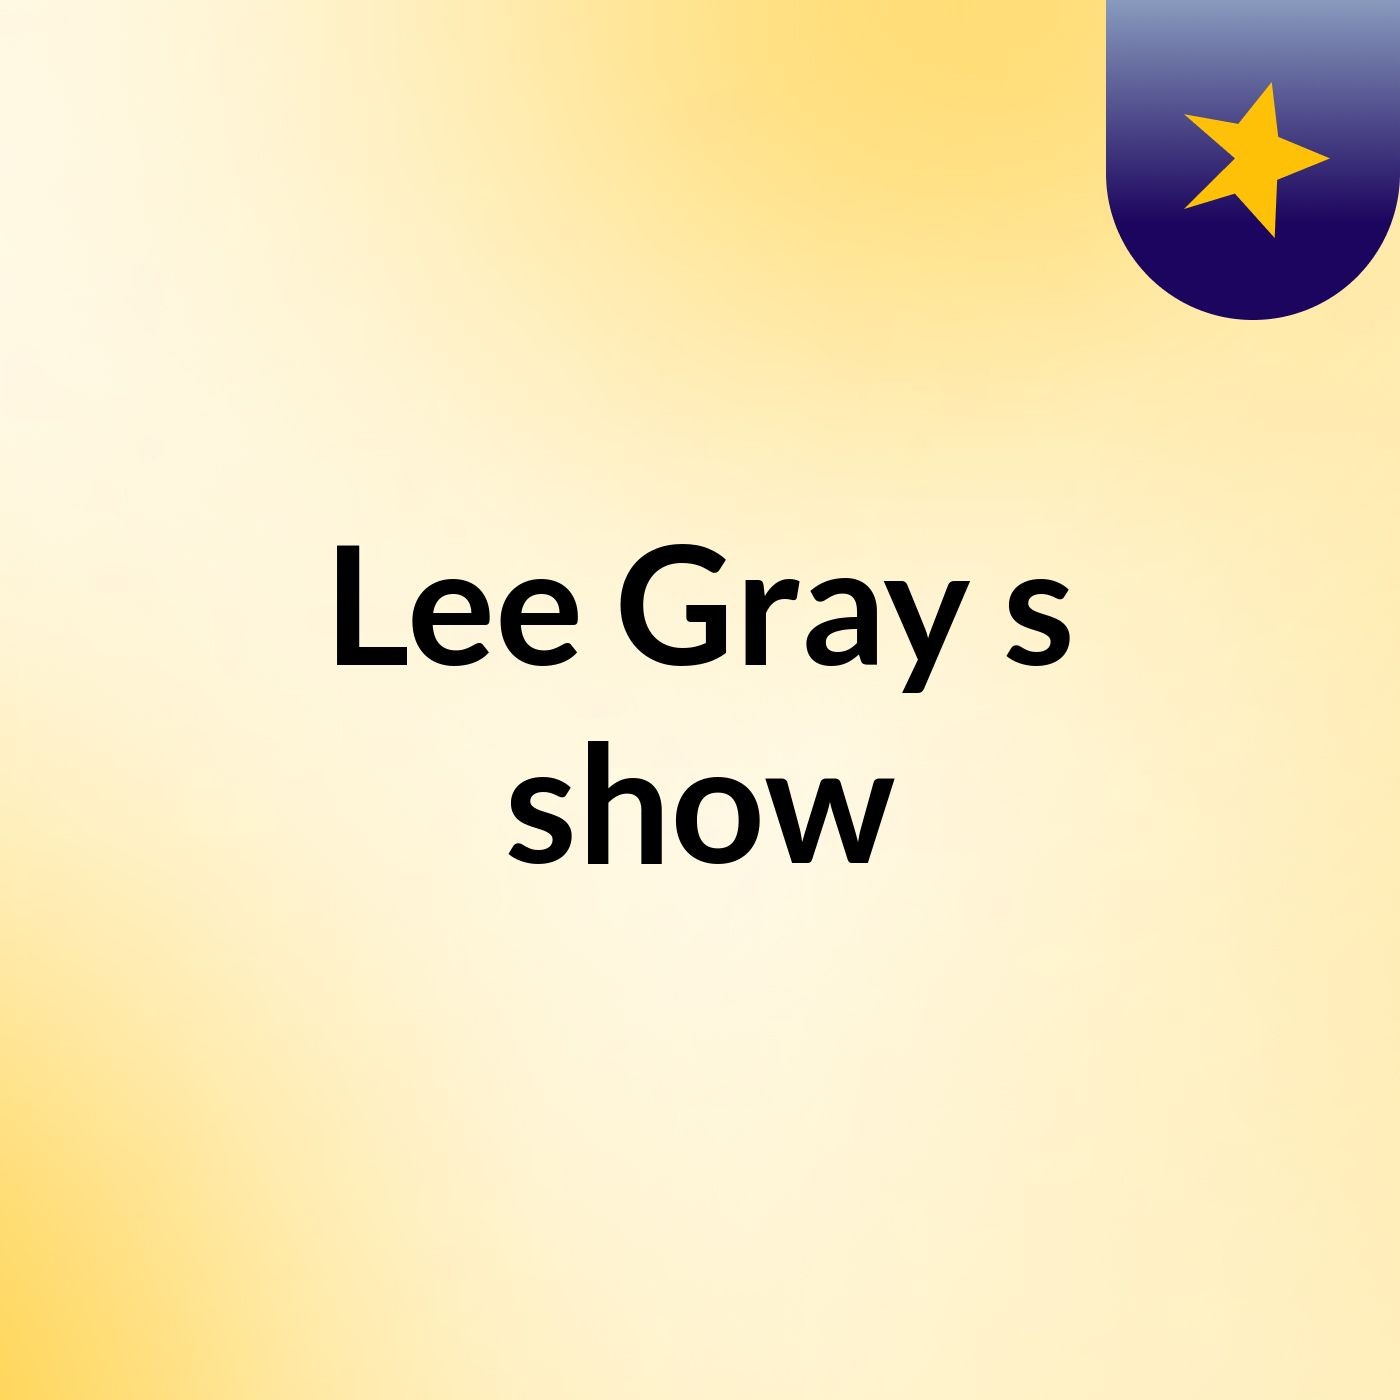 Lee Gray's show